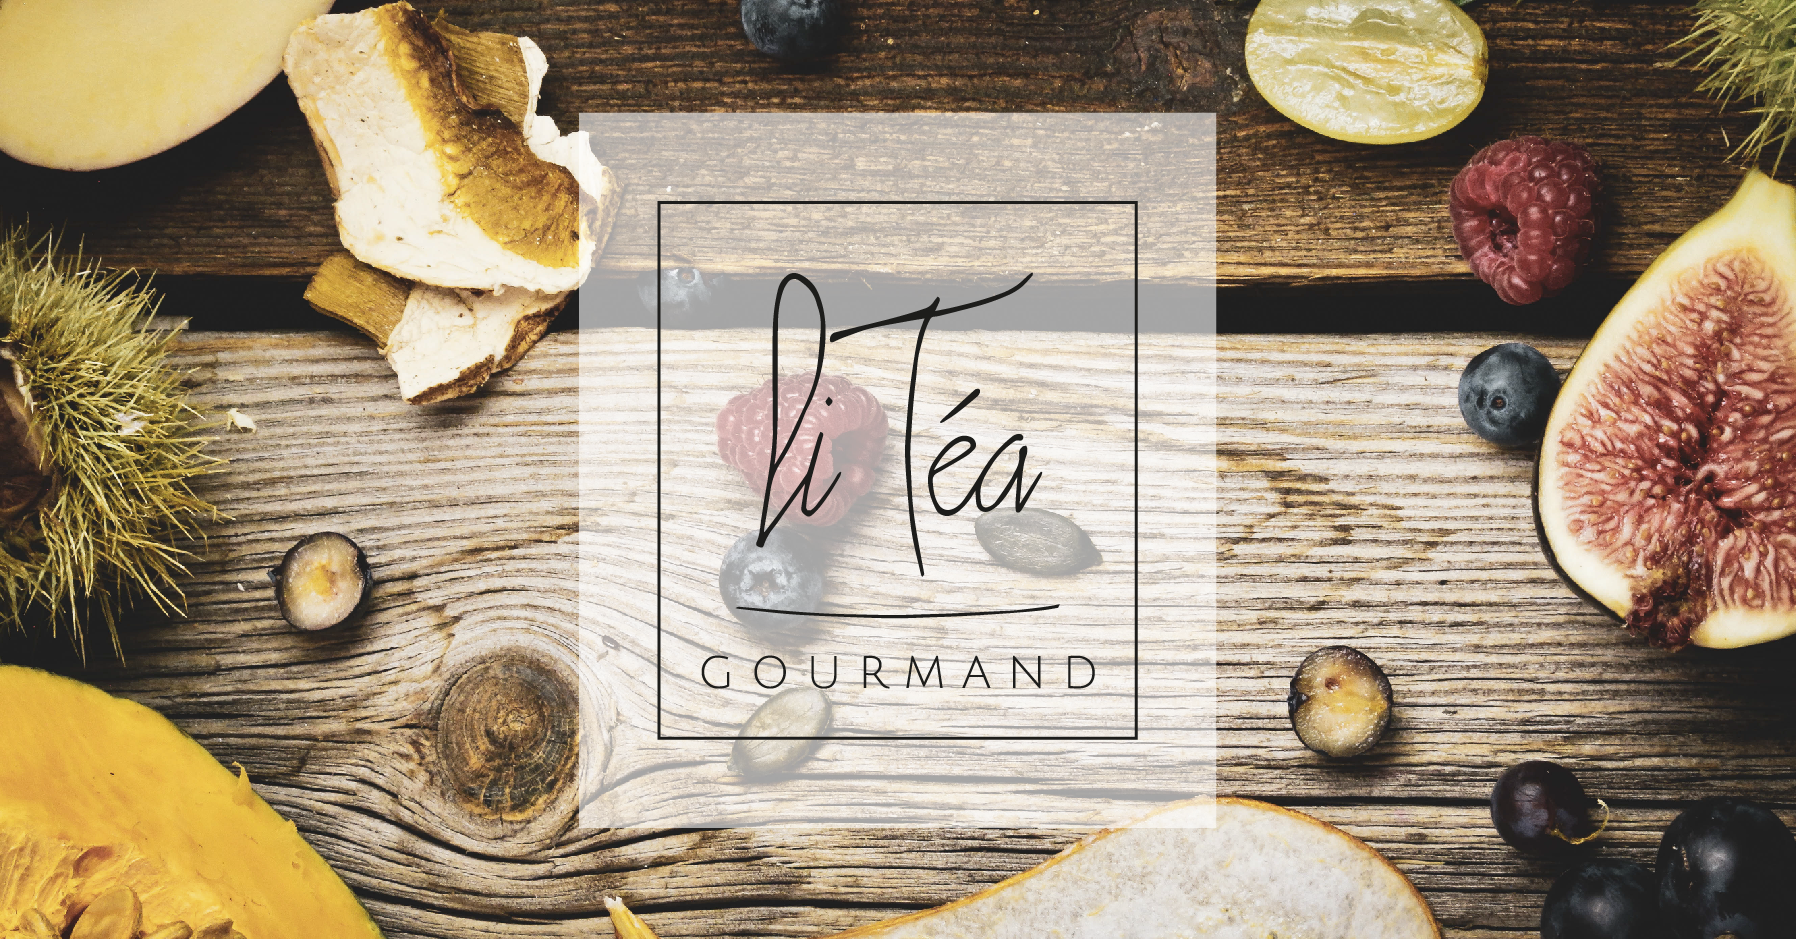 Featured image for “LI TEA GOURMAND 2019”